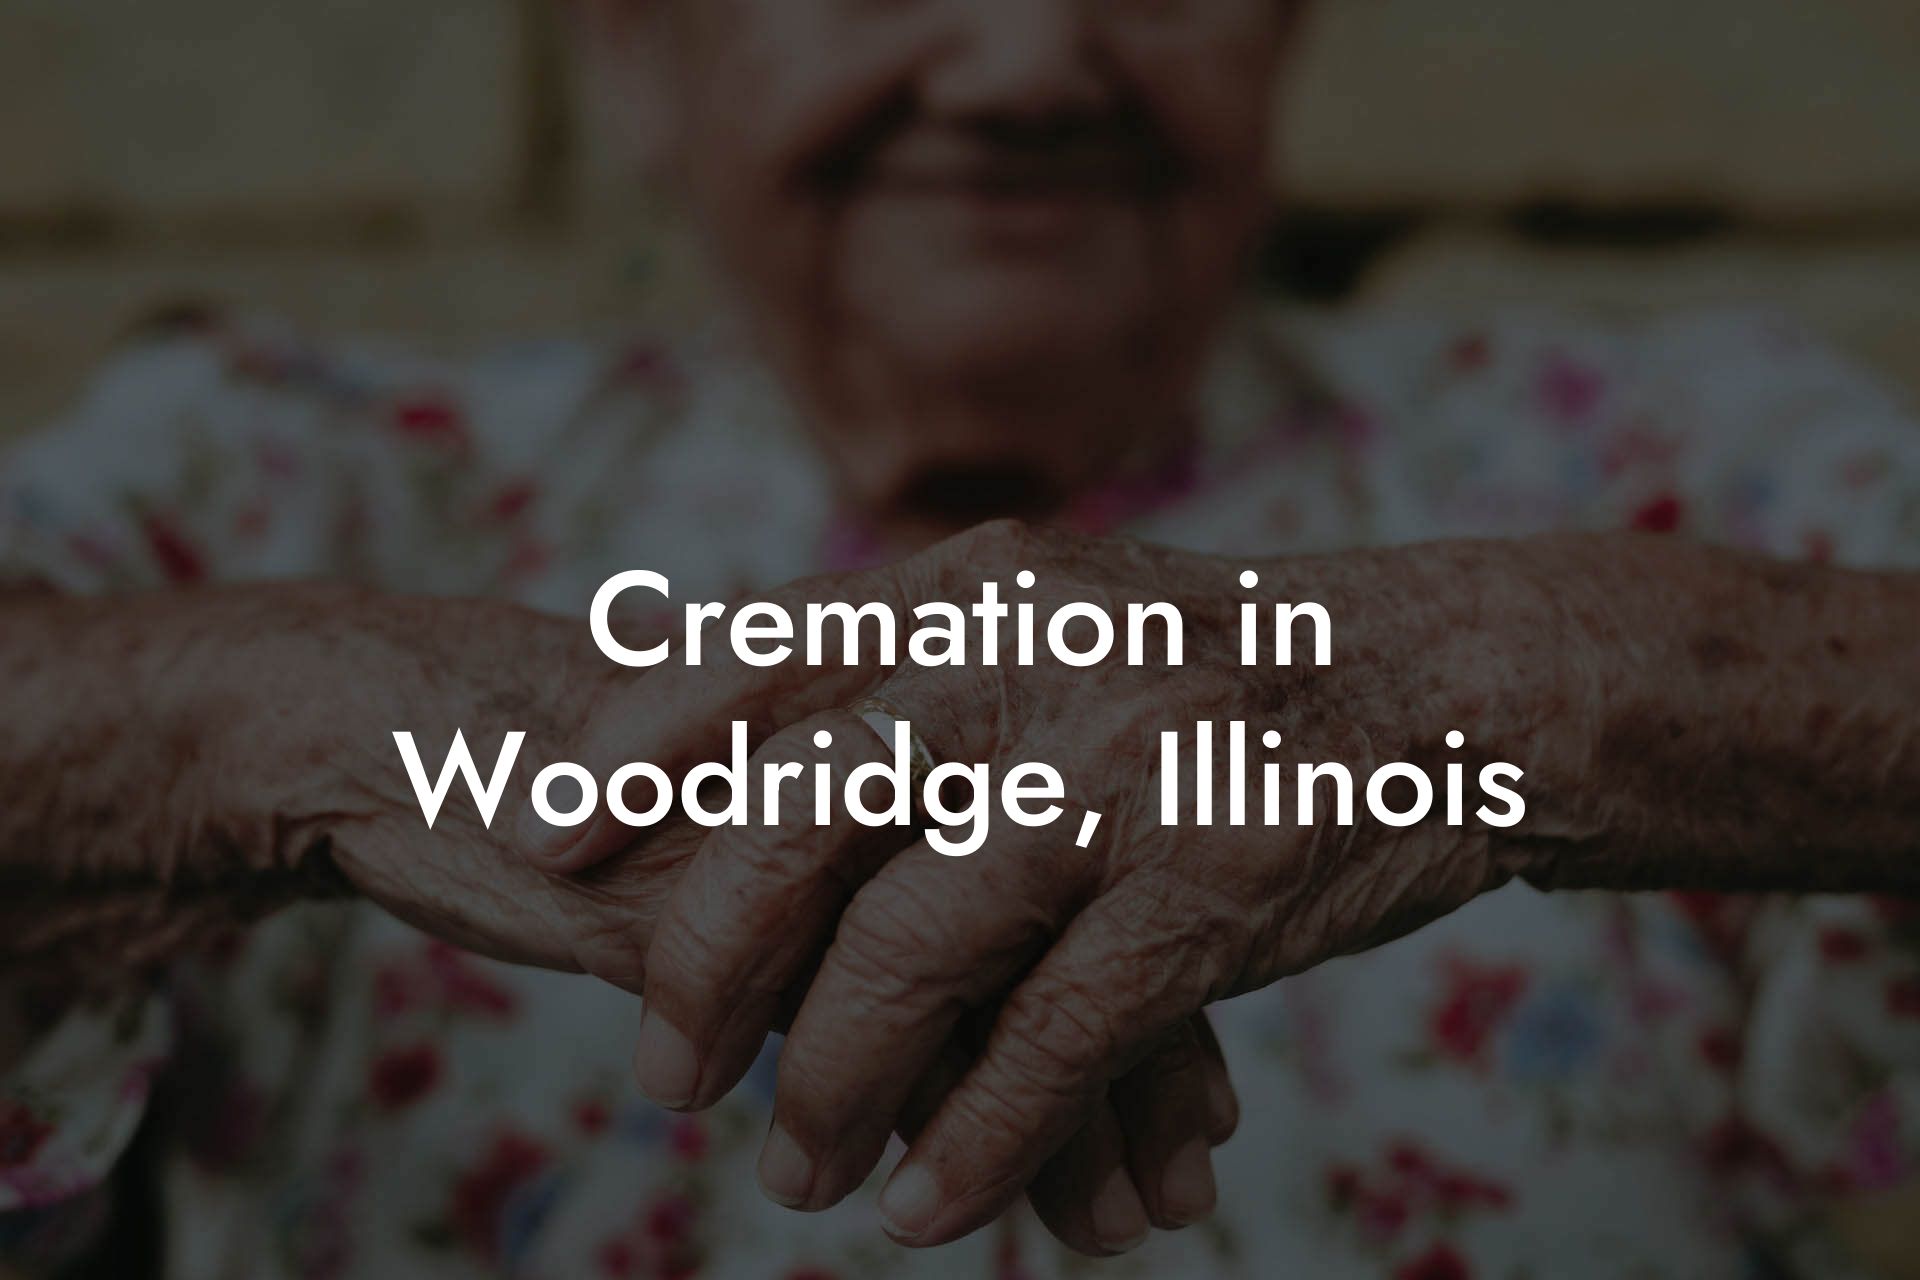 Cremation in Woodridge, Illinois